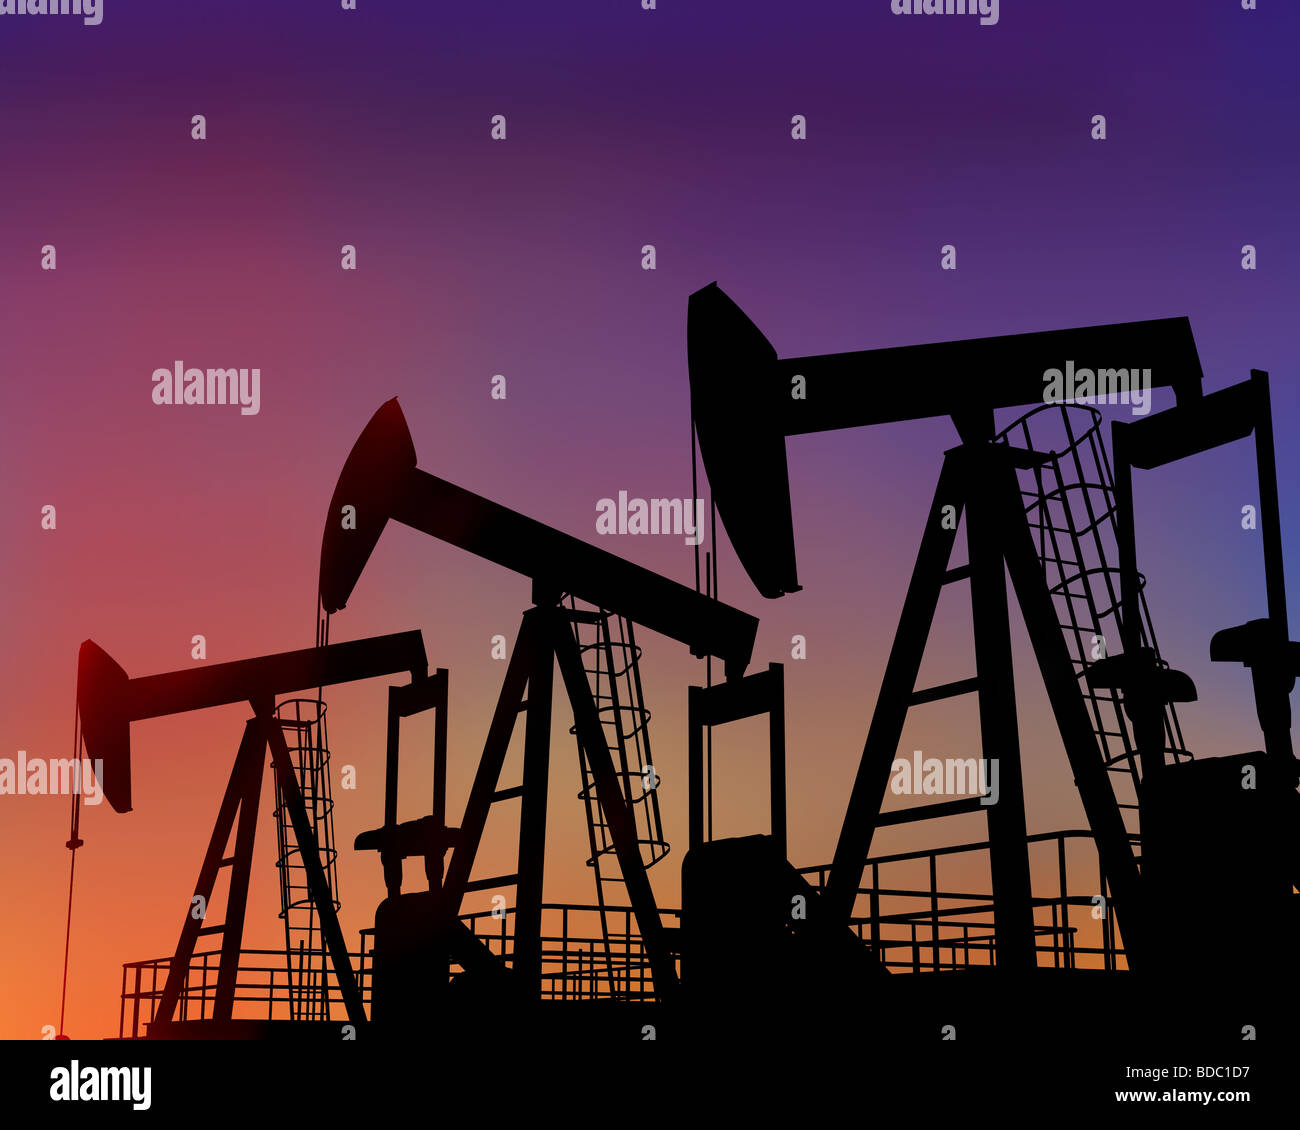 Illustration of three oil wells in the desert at dusk Stock Photo